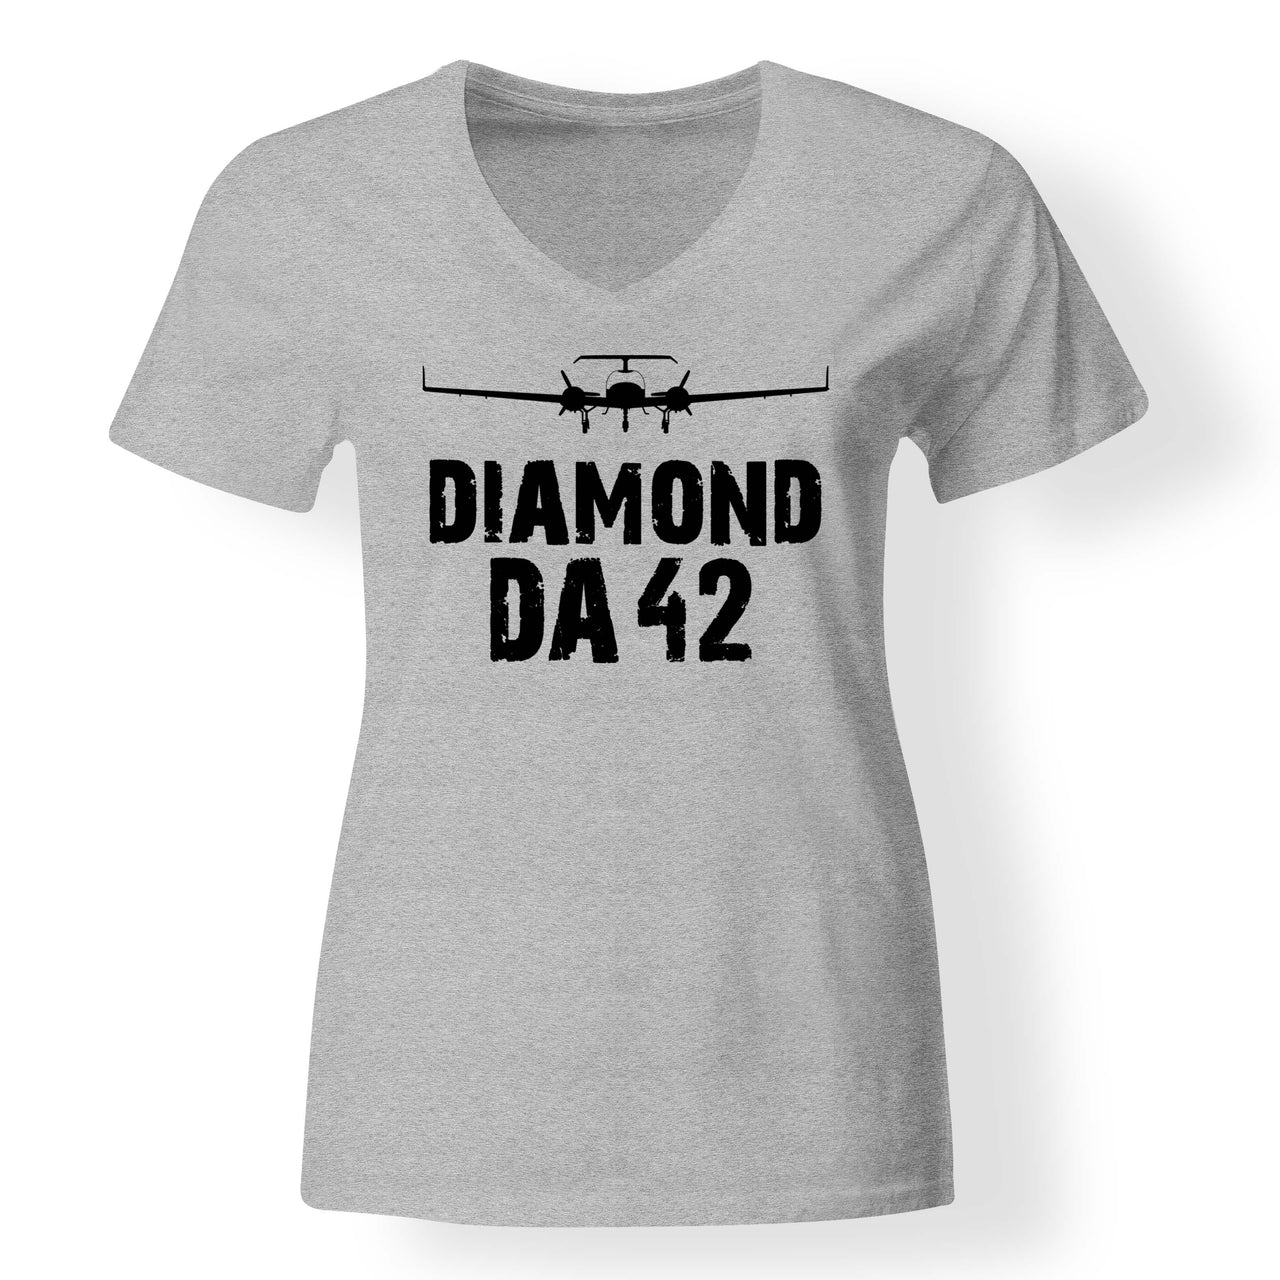 Diamond DA42 & Plane Designed V-Neck T-Shirts